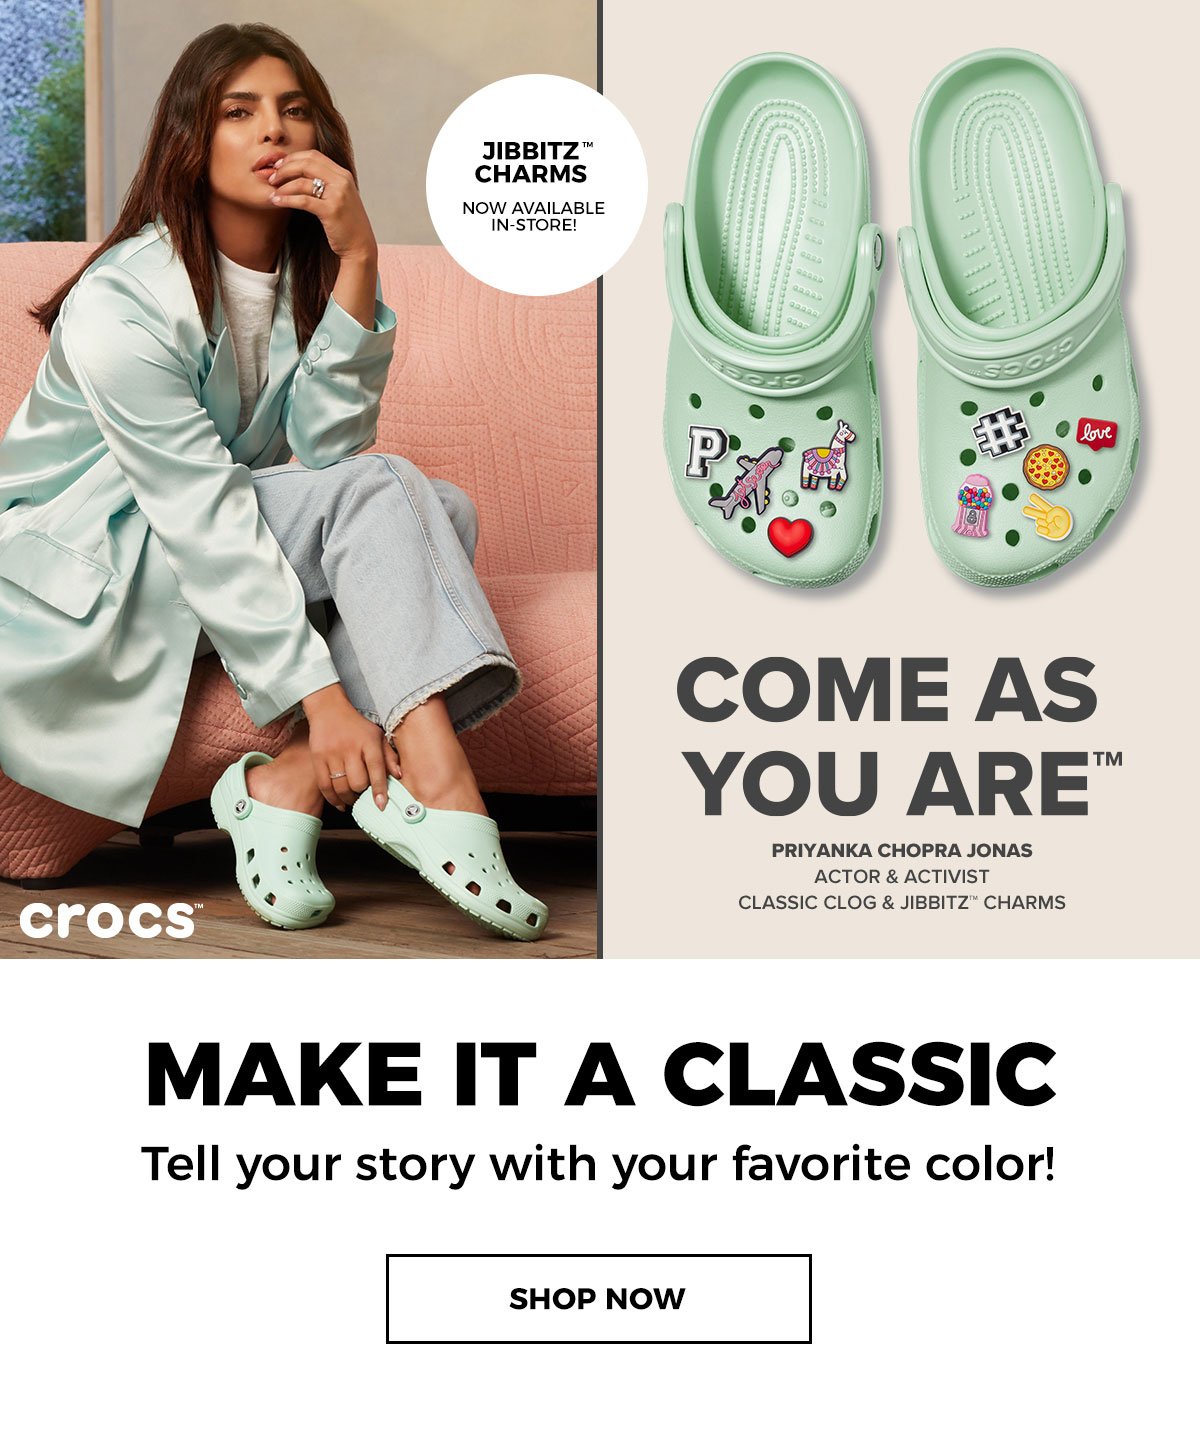 Rack Room Shoes: Slide into a Crocs 